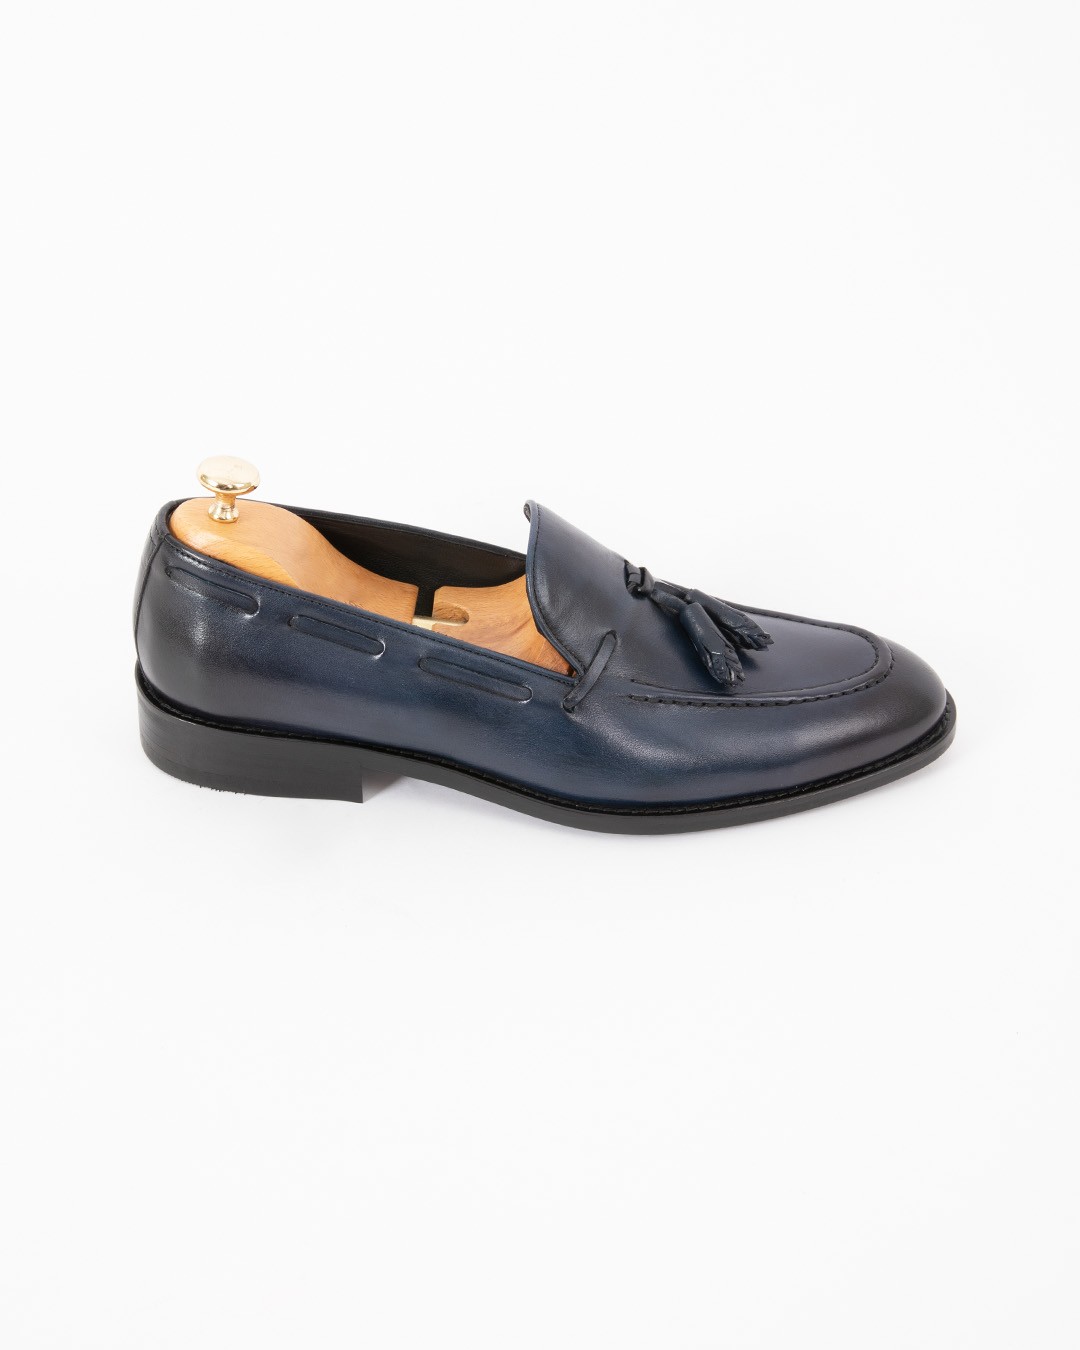 Loafer Shoes - Navy Blue